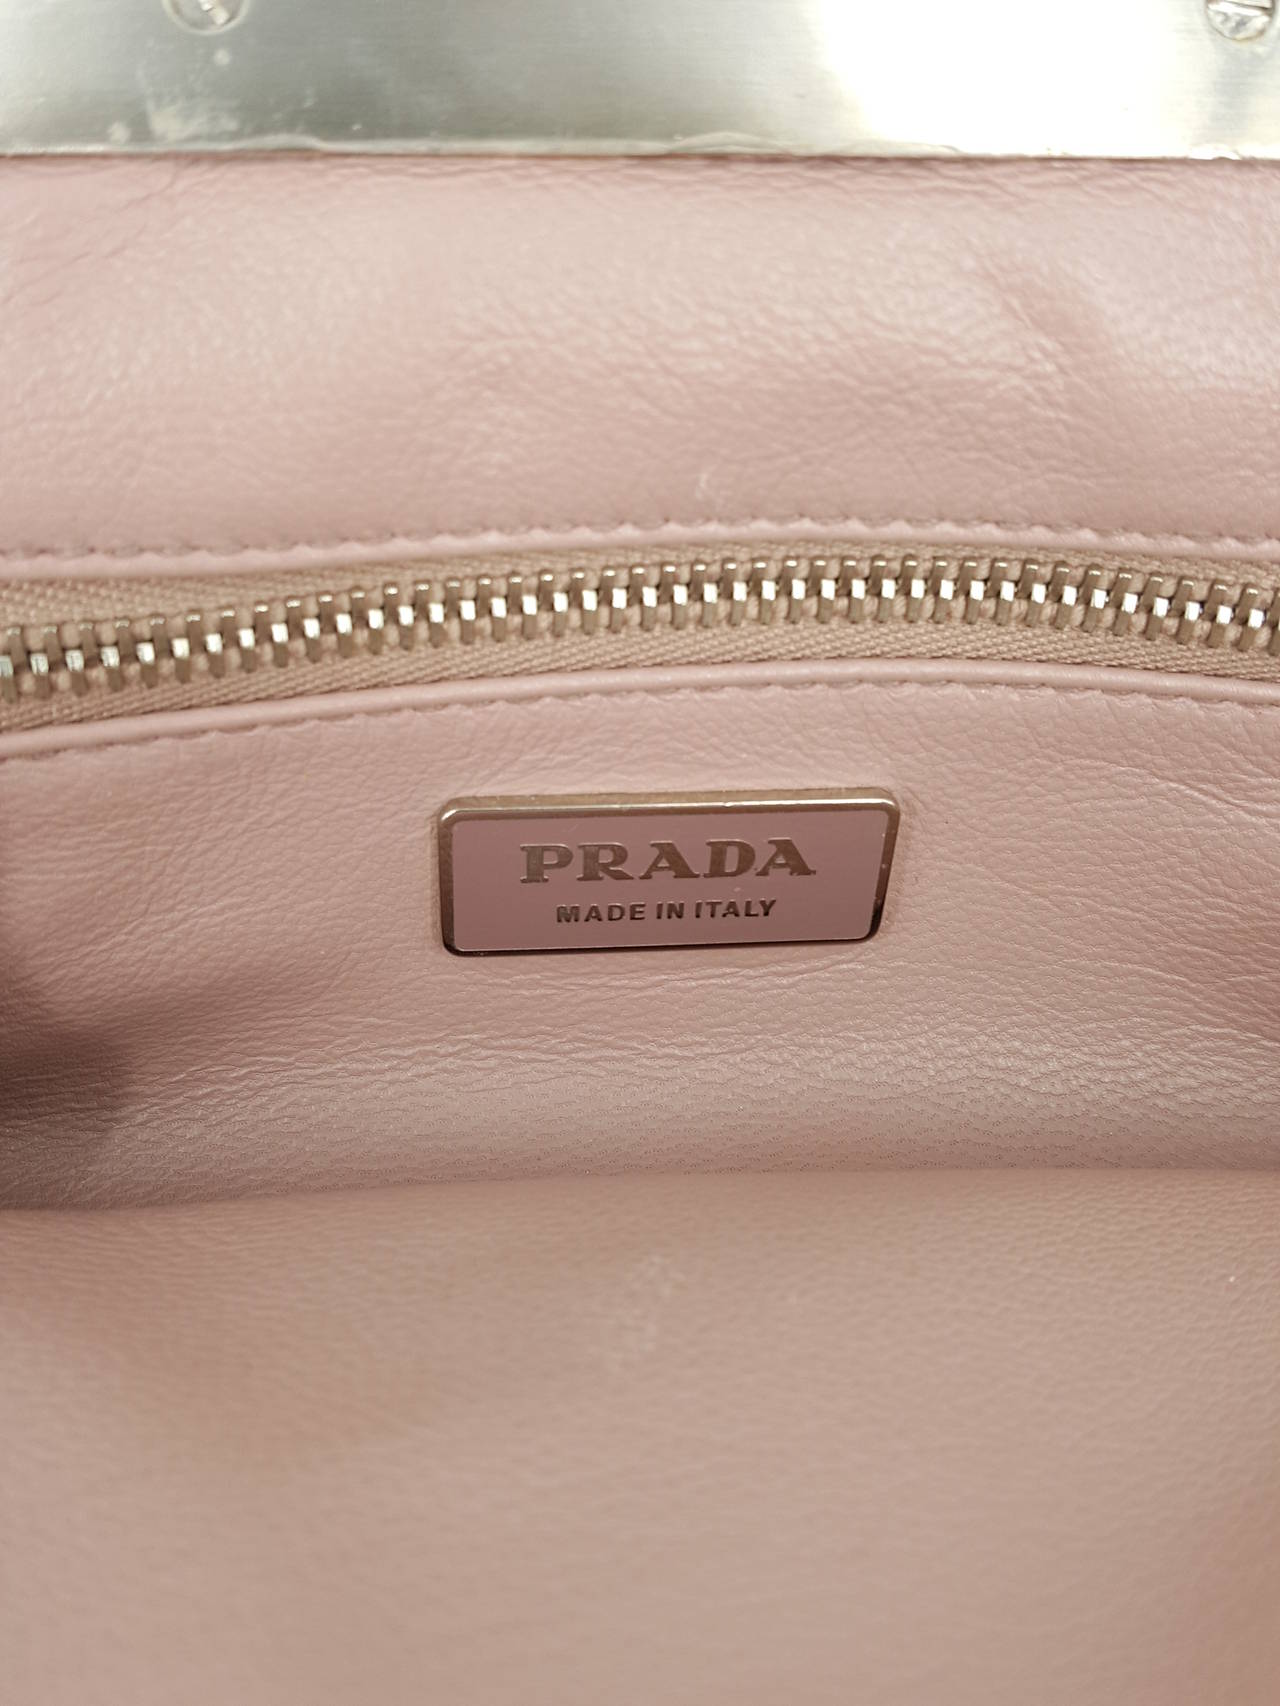 prada bag limited edition